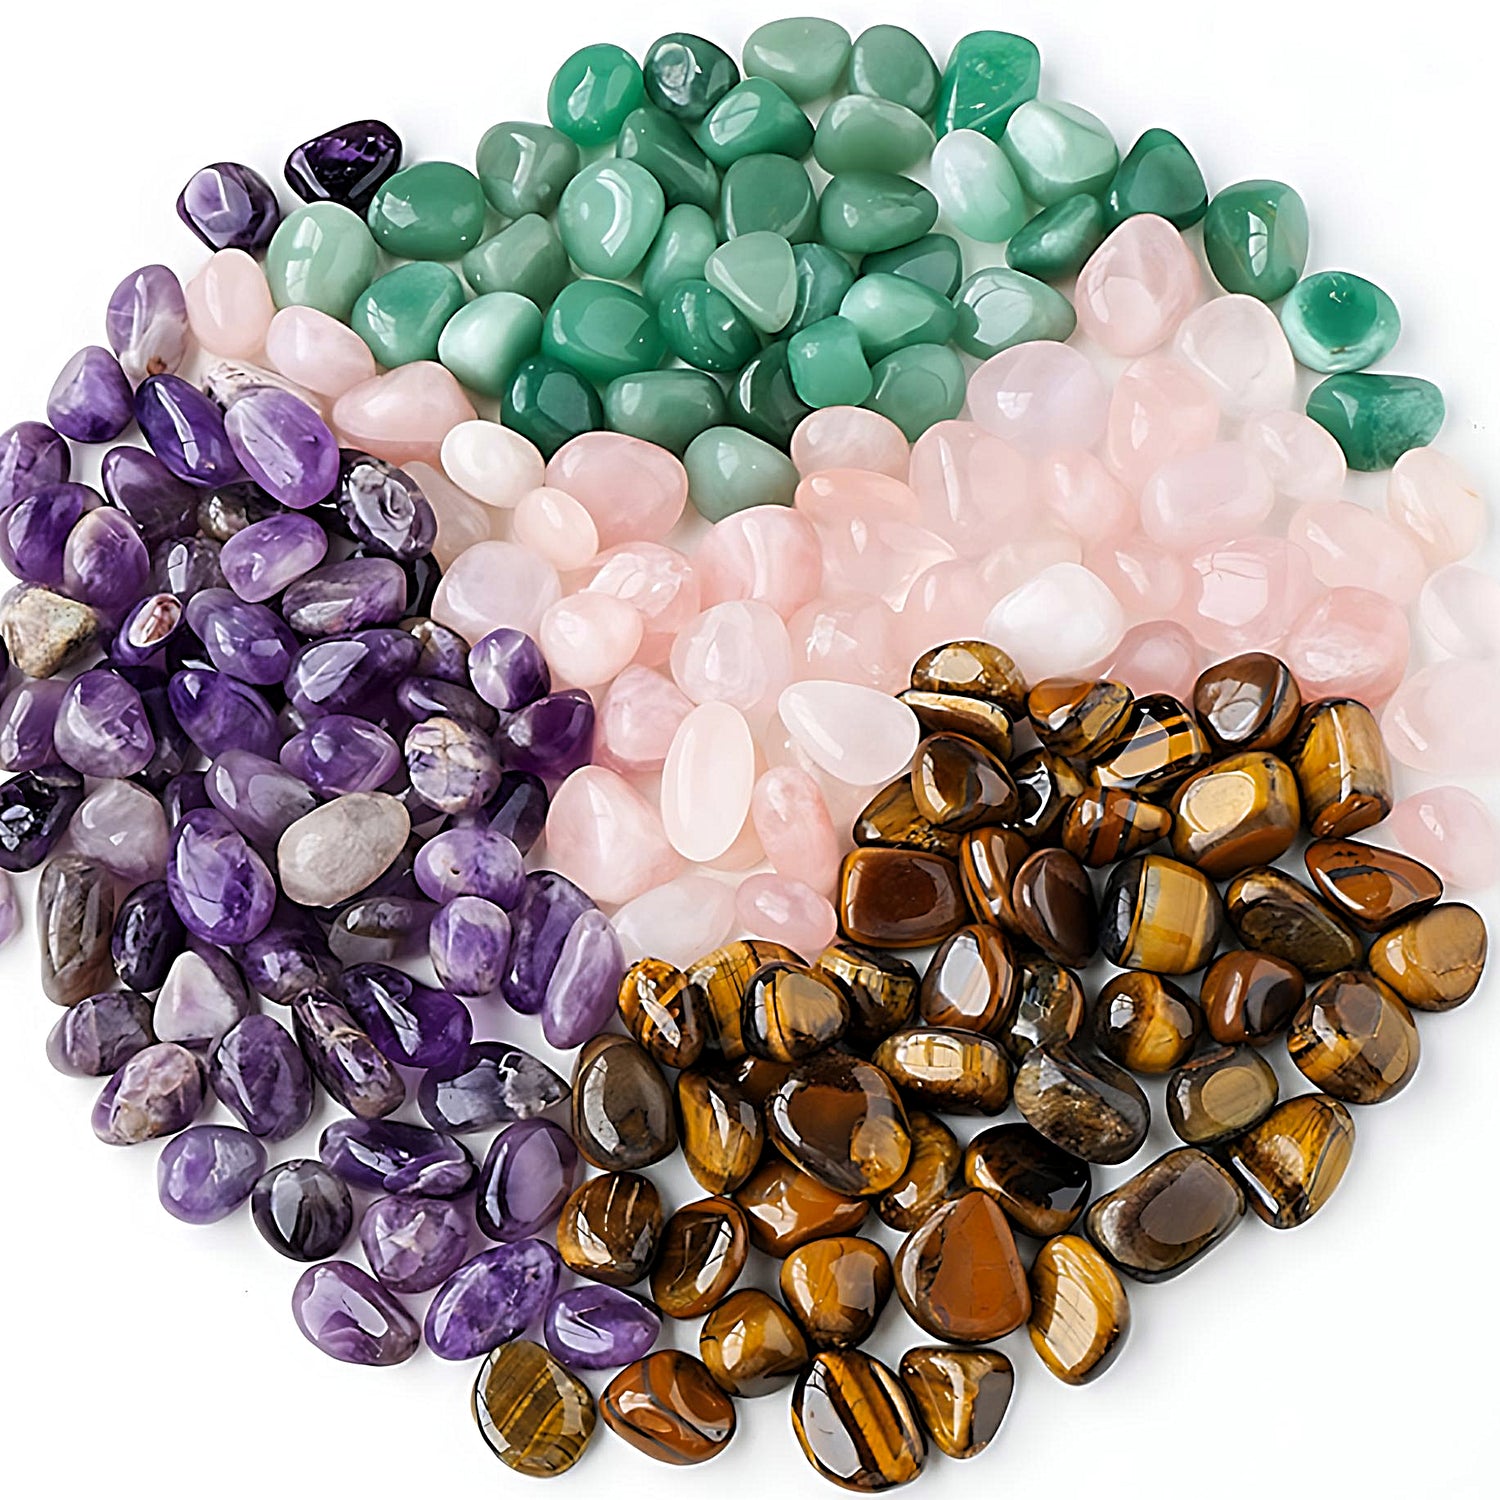 an assortment of semi-precious tumbled stones: green aventurine, pink quartz, tiger eye, and amethyst